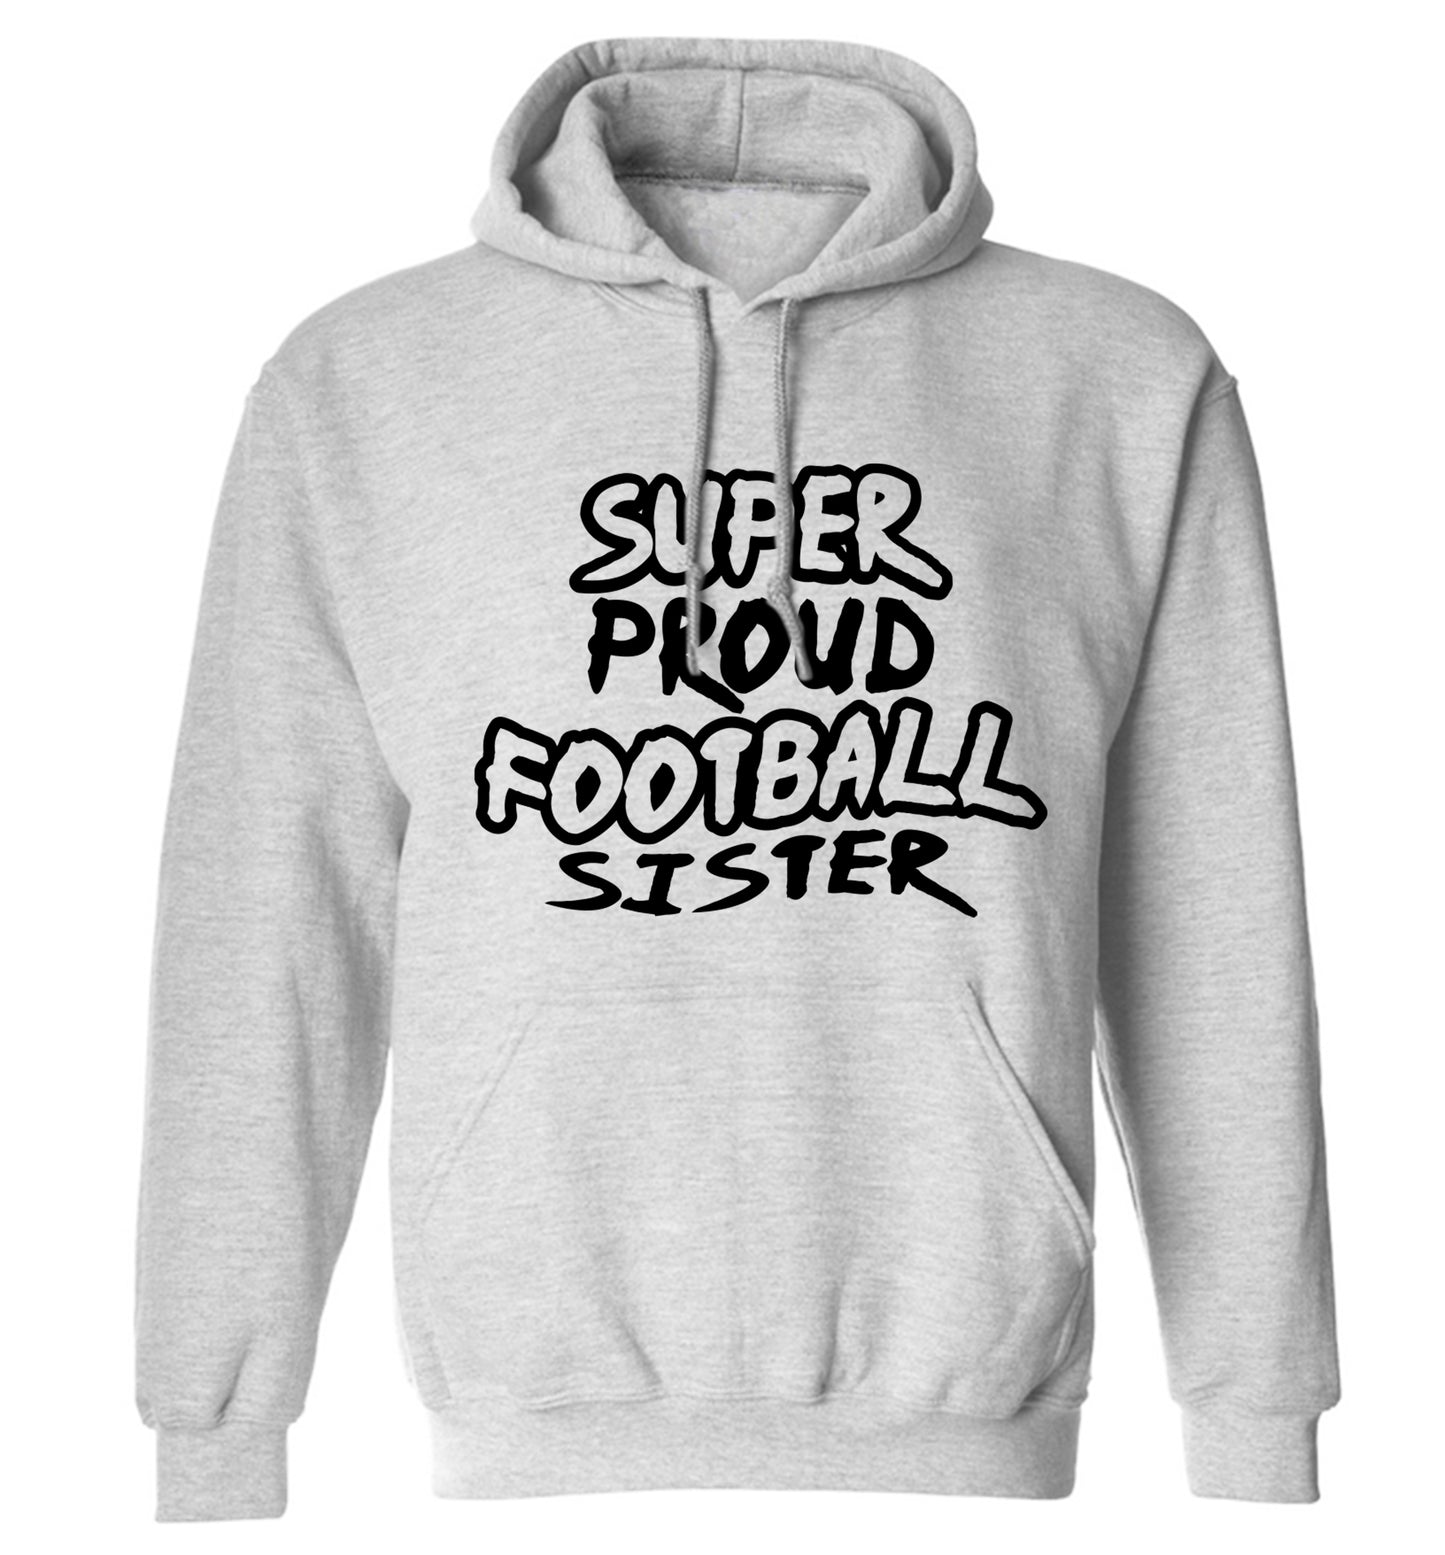 Super proud football sister adults unisexgrey hoodie 2XL